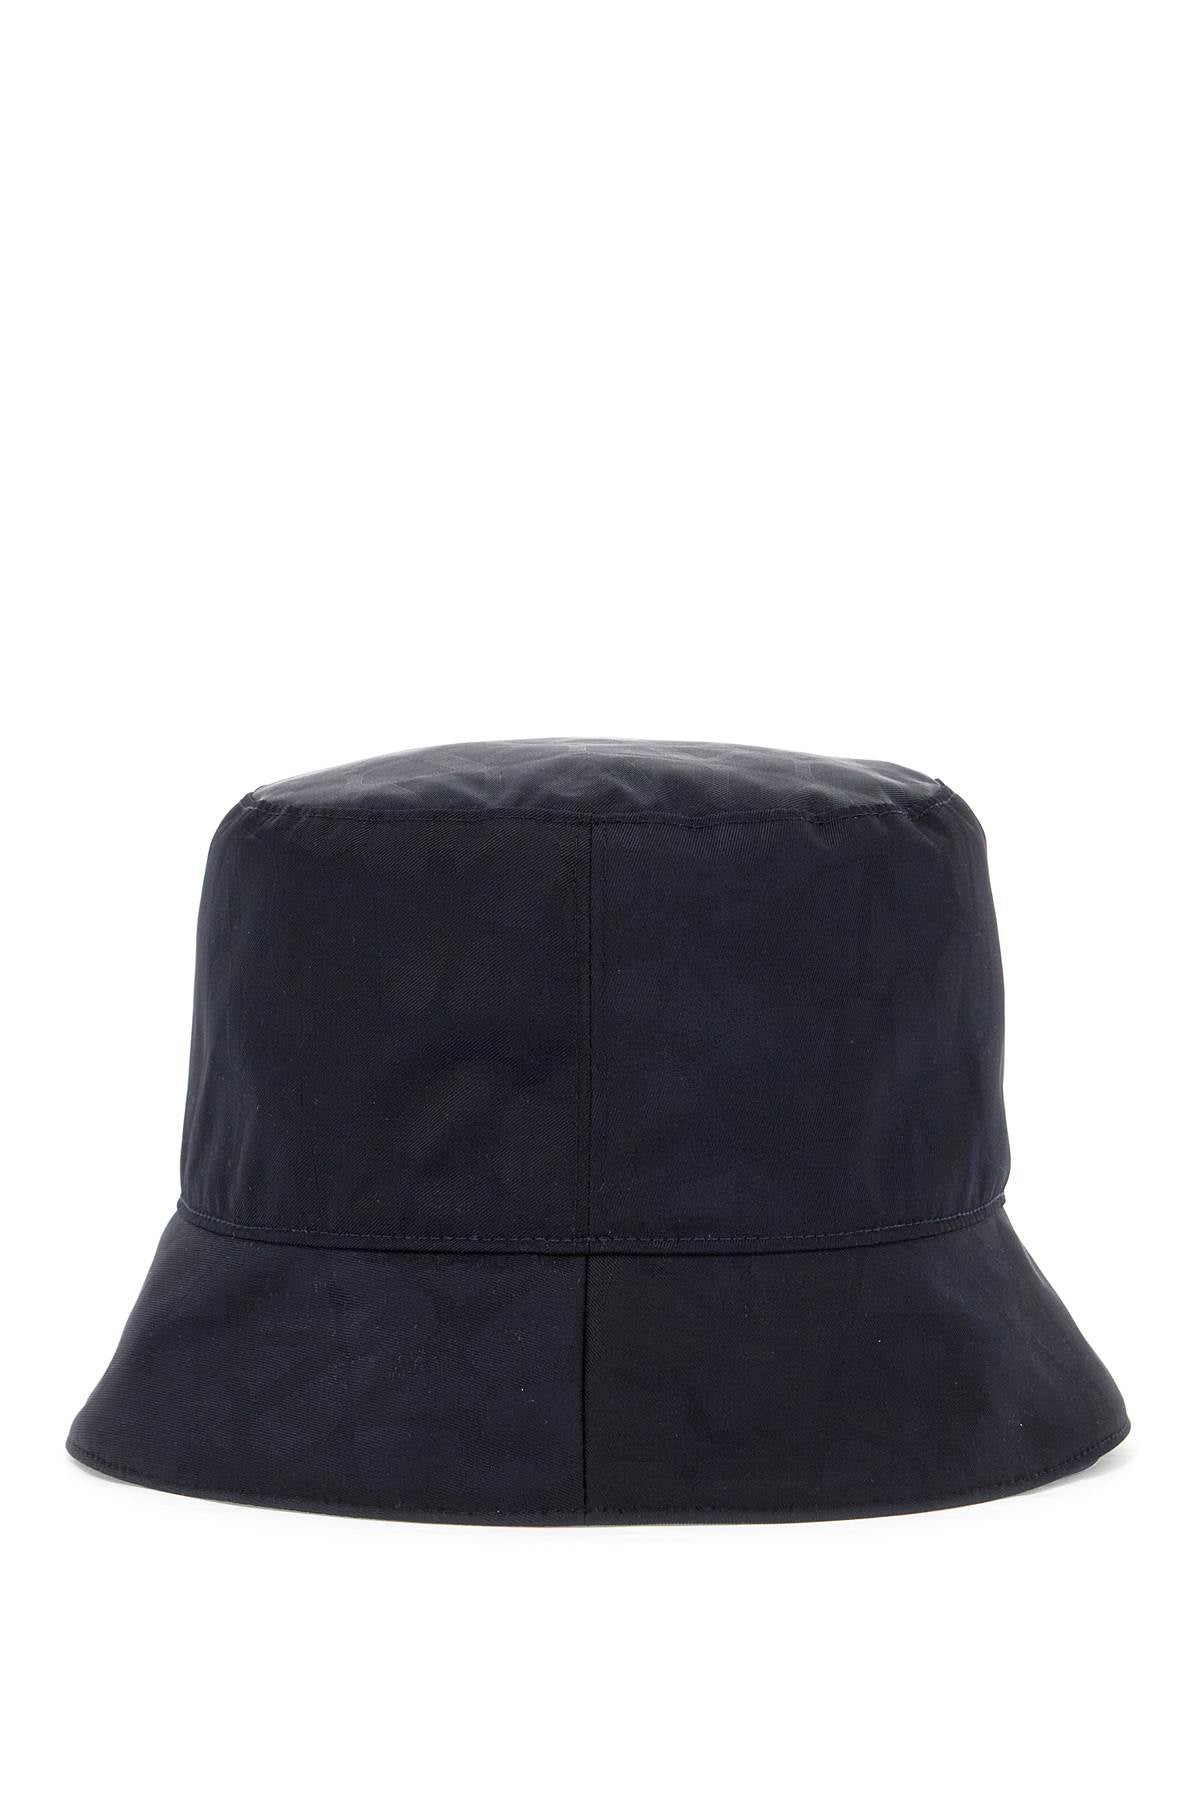 Valentino GARAVANI reversible bucket hat with pouch pocket - Blue